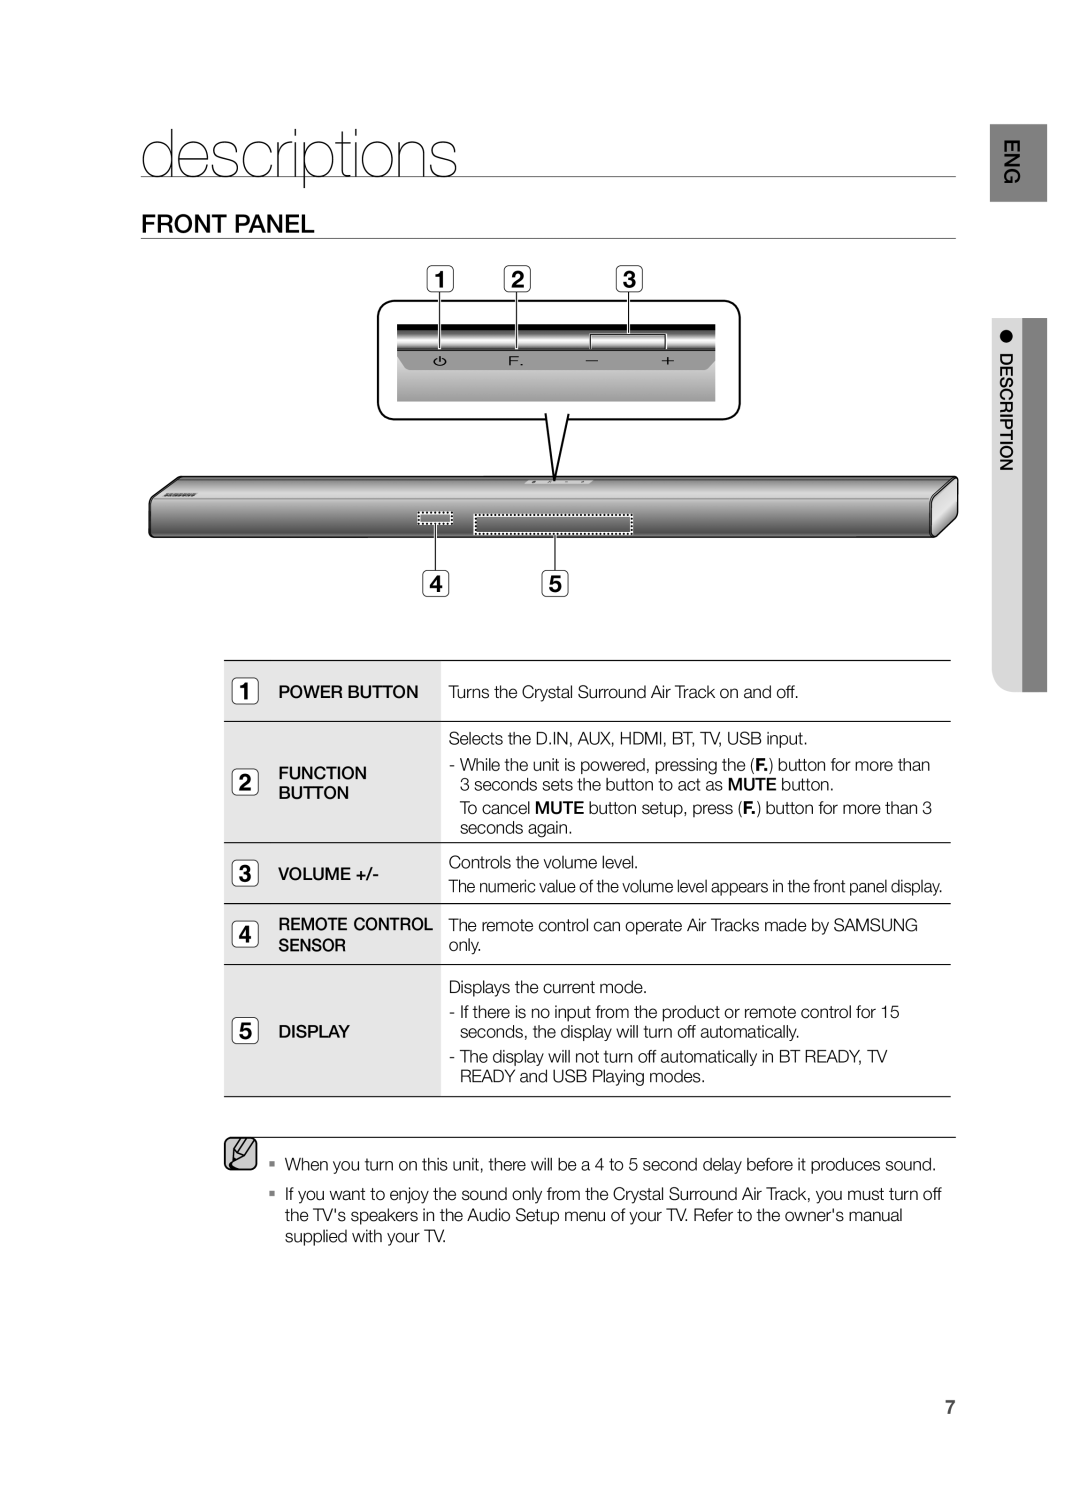 Samsung HW-FM55C user manual descriptions, Front Panel 